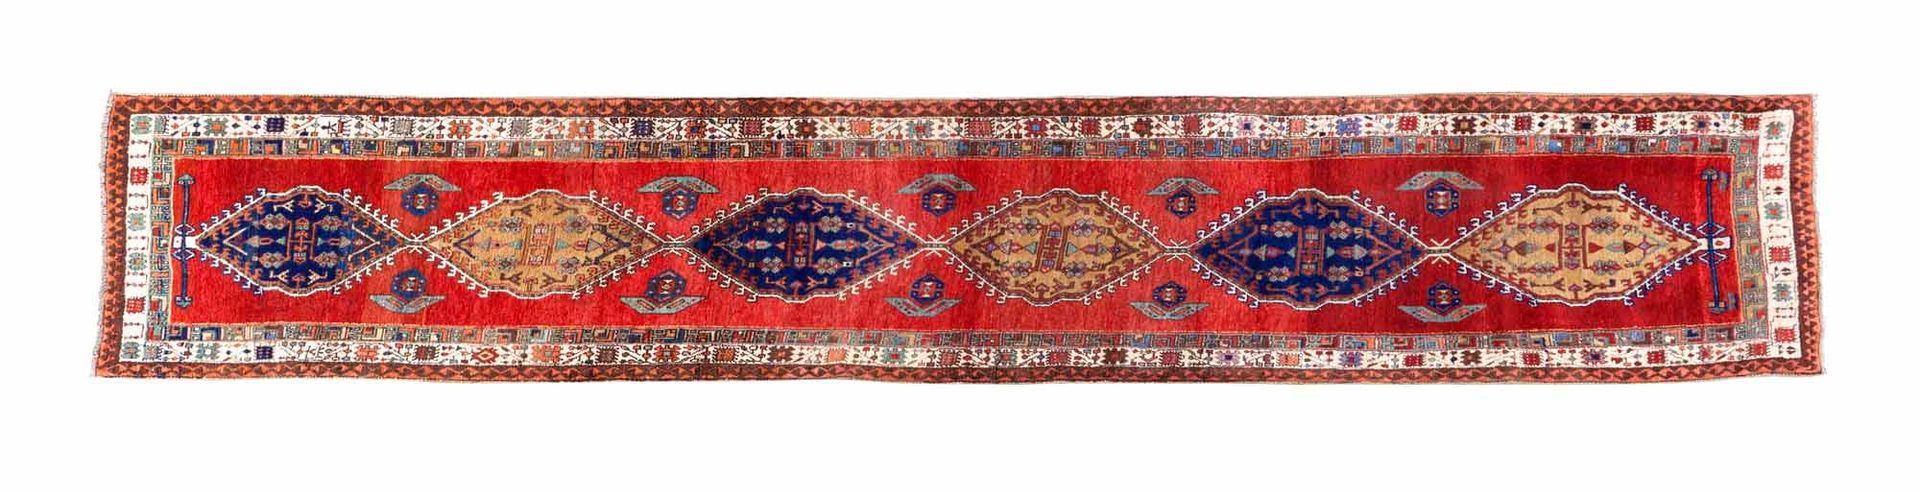 Null SARAB画廊地毯（波斯），20世纪前三分之一时期

尺寸：405 x 95厘米。

技术特点 : 羊毛天鹅绒，棉质底板。

樱桃红的背景上装饰着一连&hellip;